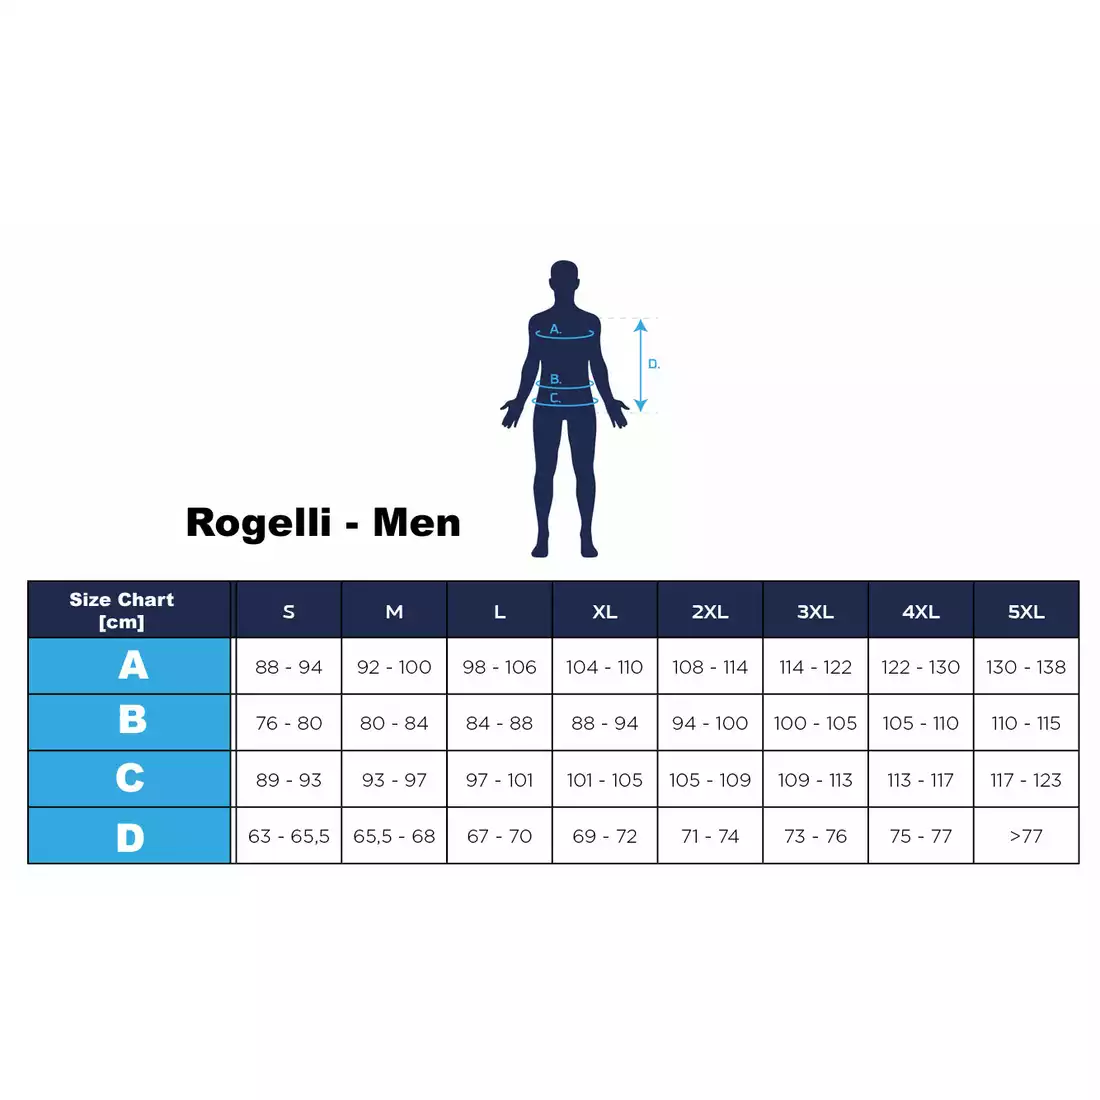 ROGELLI TEAM 2.0 ciepła bluza rowerowa niebieska